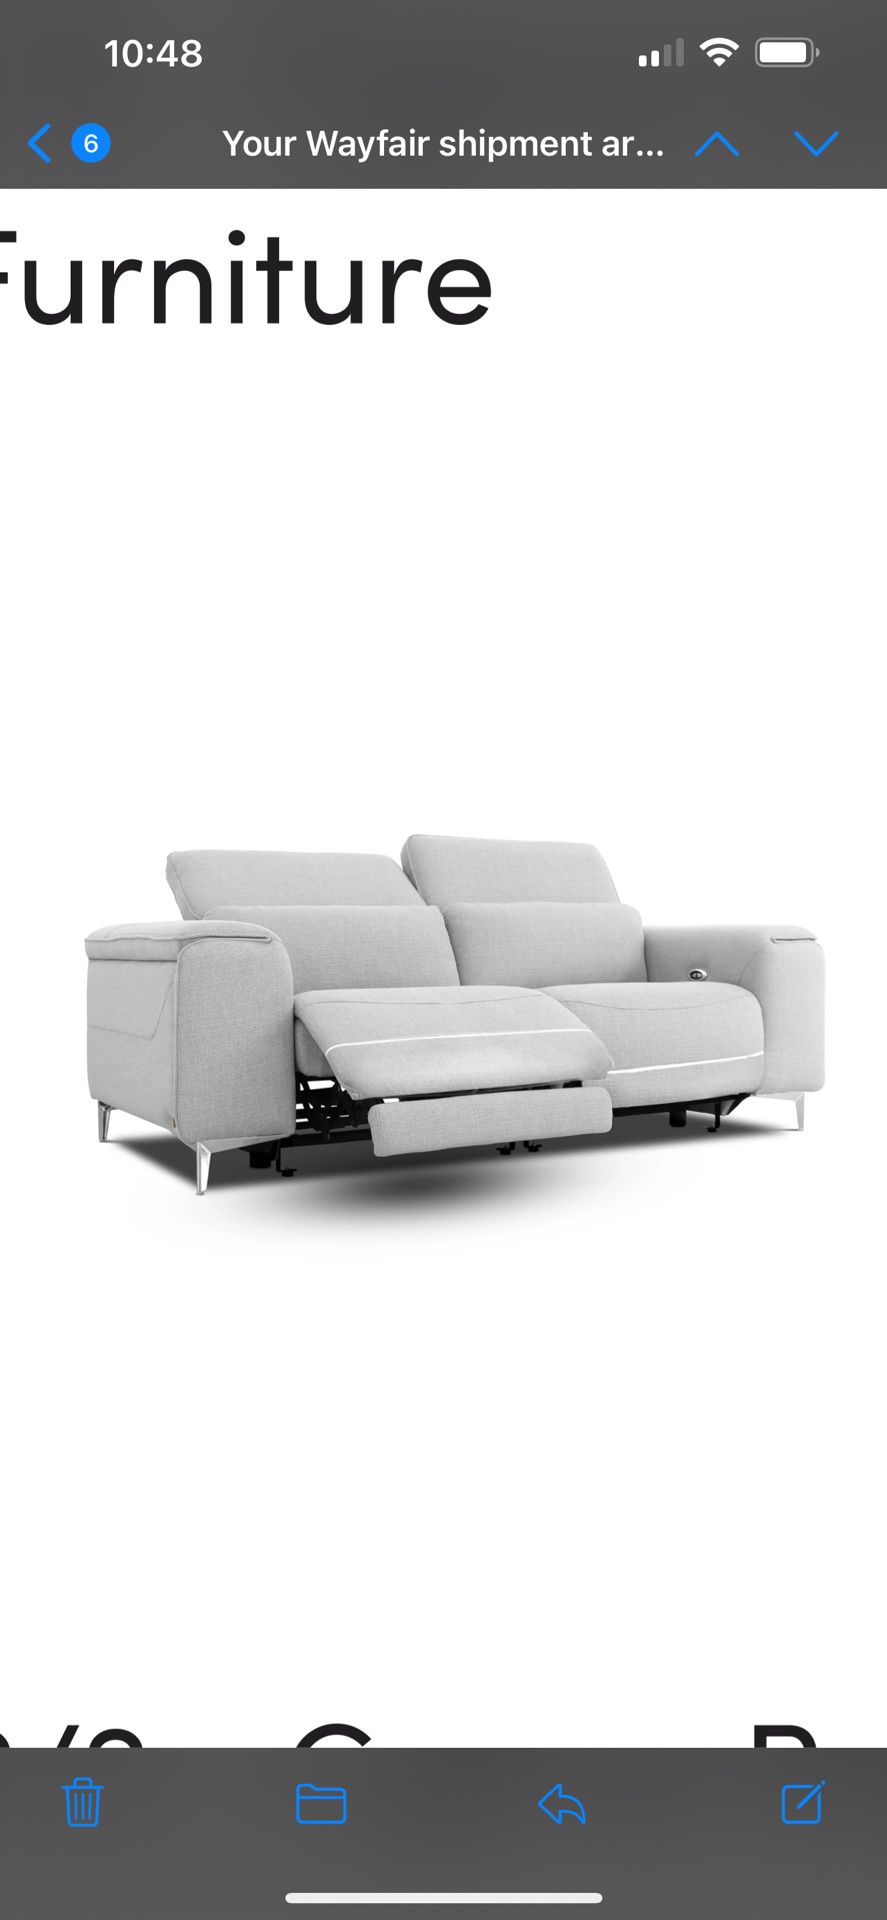 VIG Furniture 84” Electric Recliner Sofa